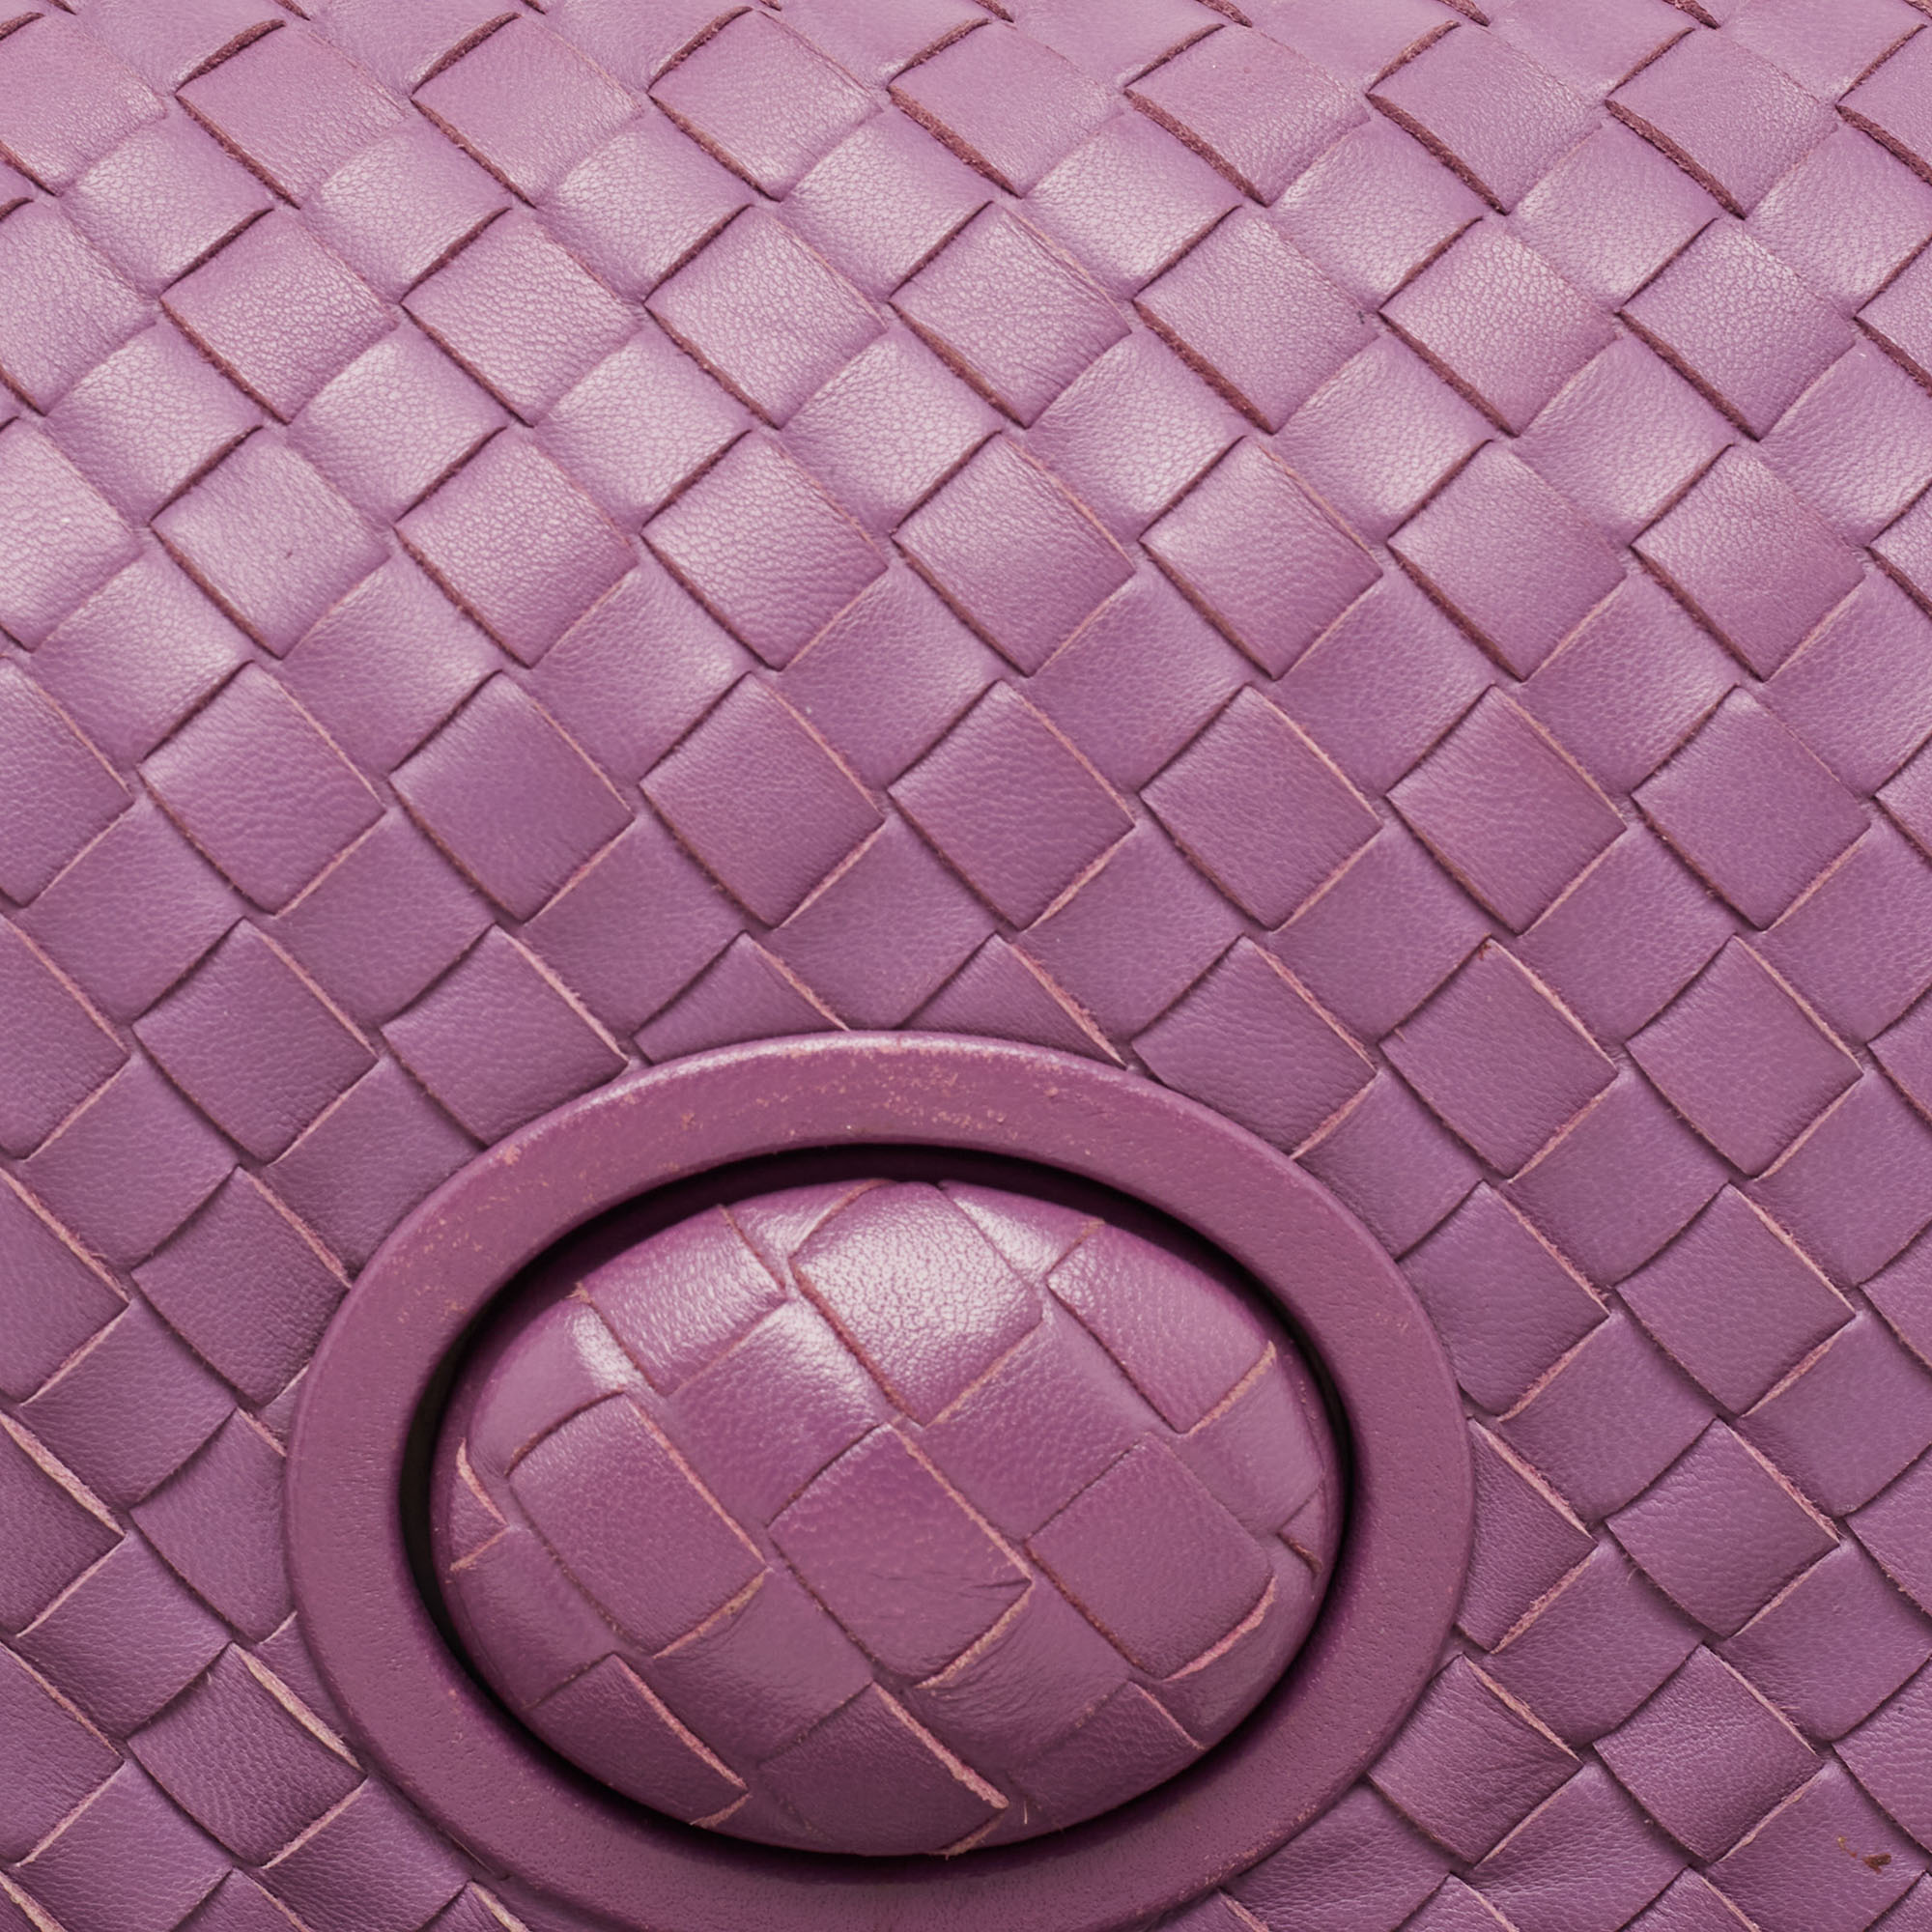 Bottega Veneta Purple Intrecciato Leather Twist Lock Flap Clutch